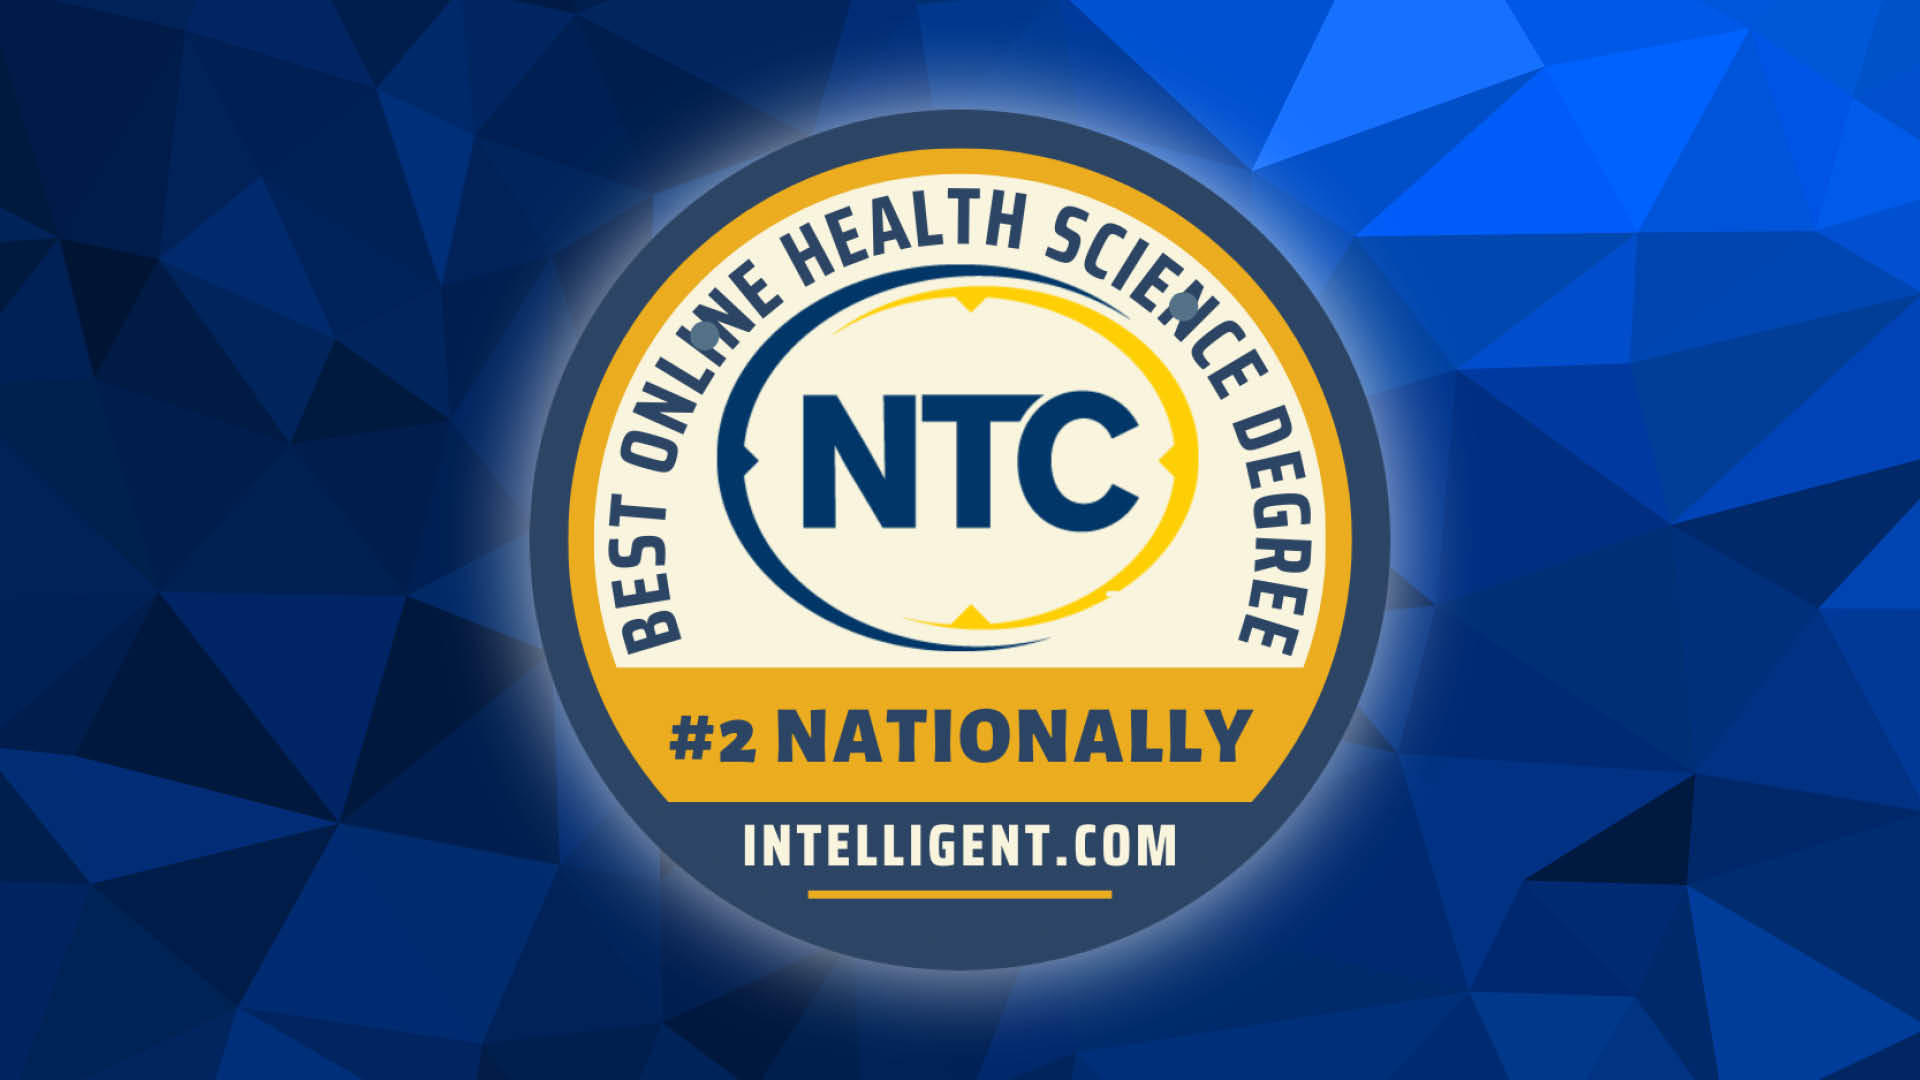 Award badge reading "Best Online Health Science Degree" #2 Nationally, Intelligent.com